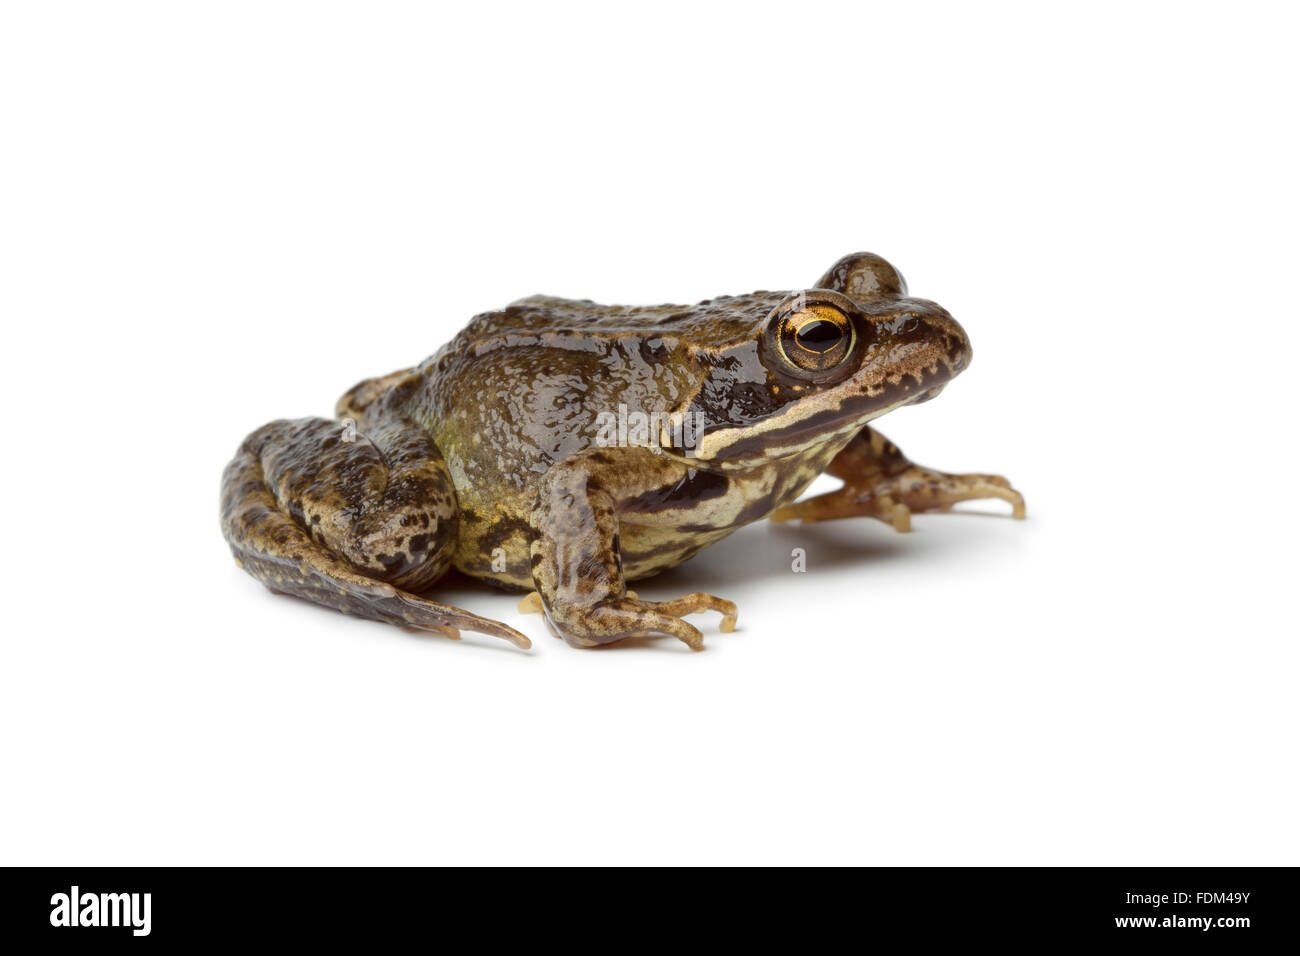 Common frog on white background Stock Photo